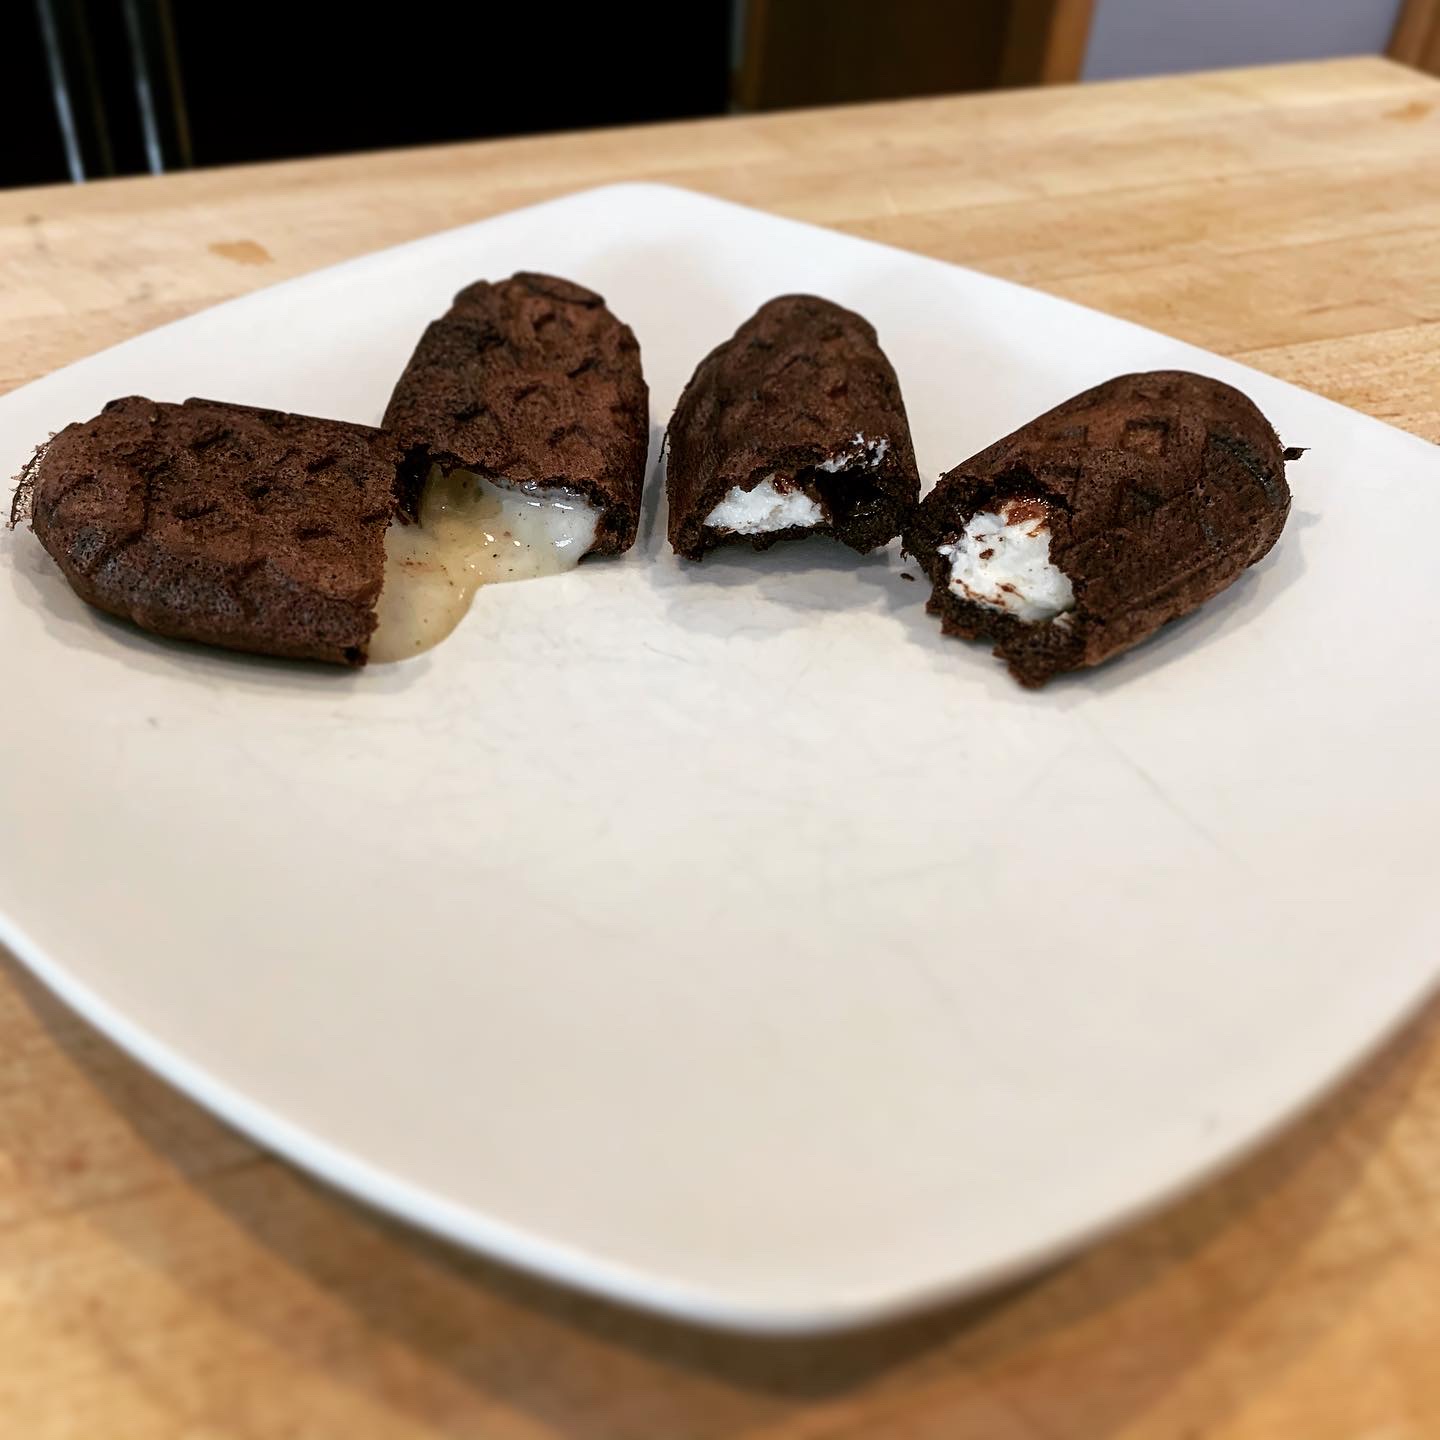 Homemade Chocolate Twinkies - The Soccer Mom Blog